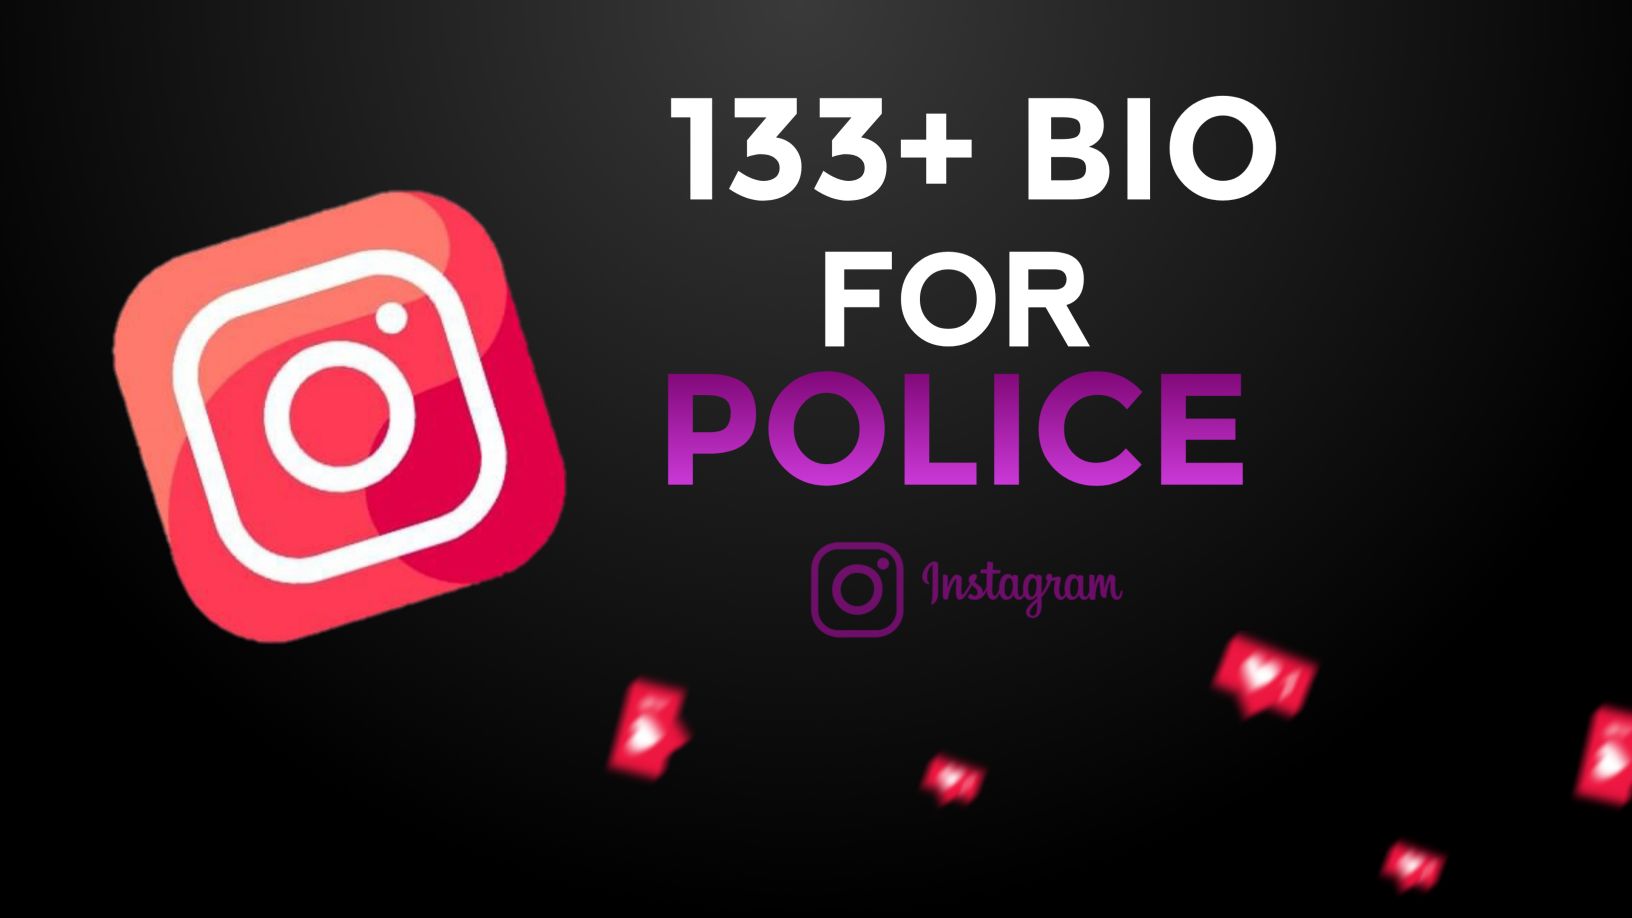 133+ Police Bio For Instagram Copy and Paste - NewBioIdea